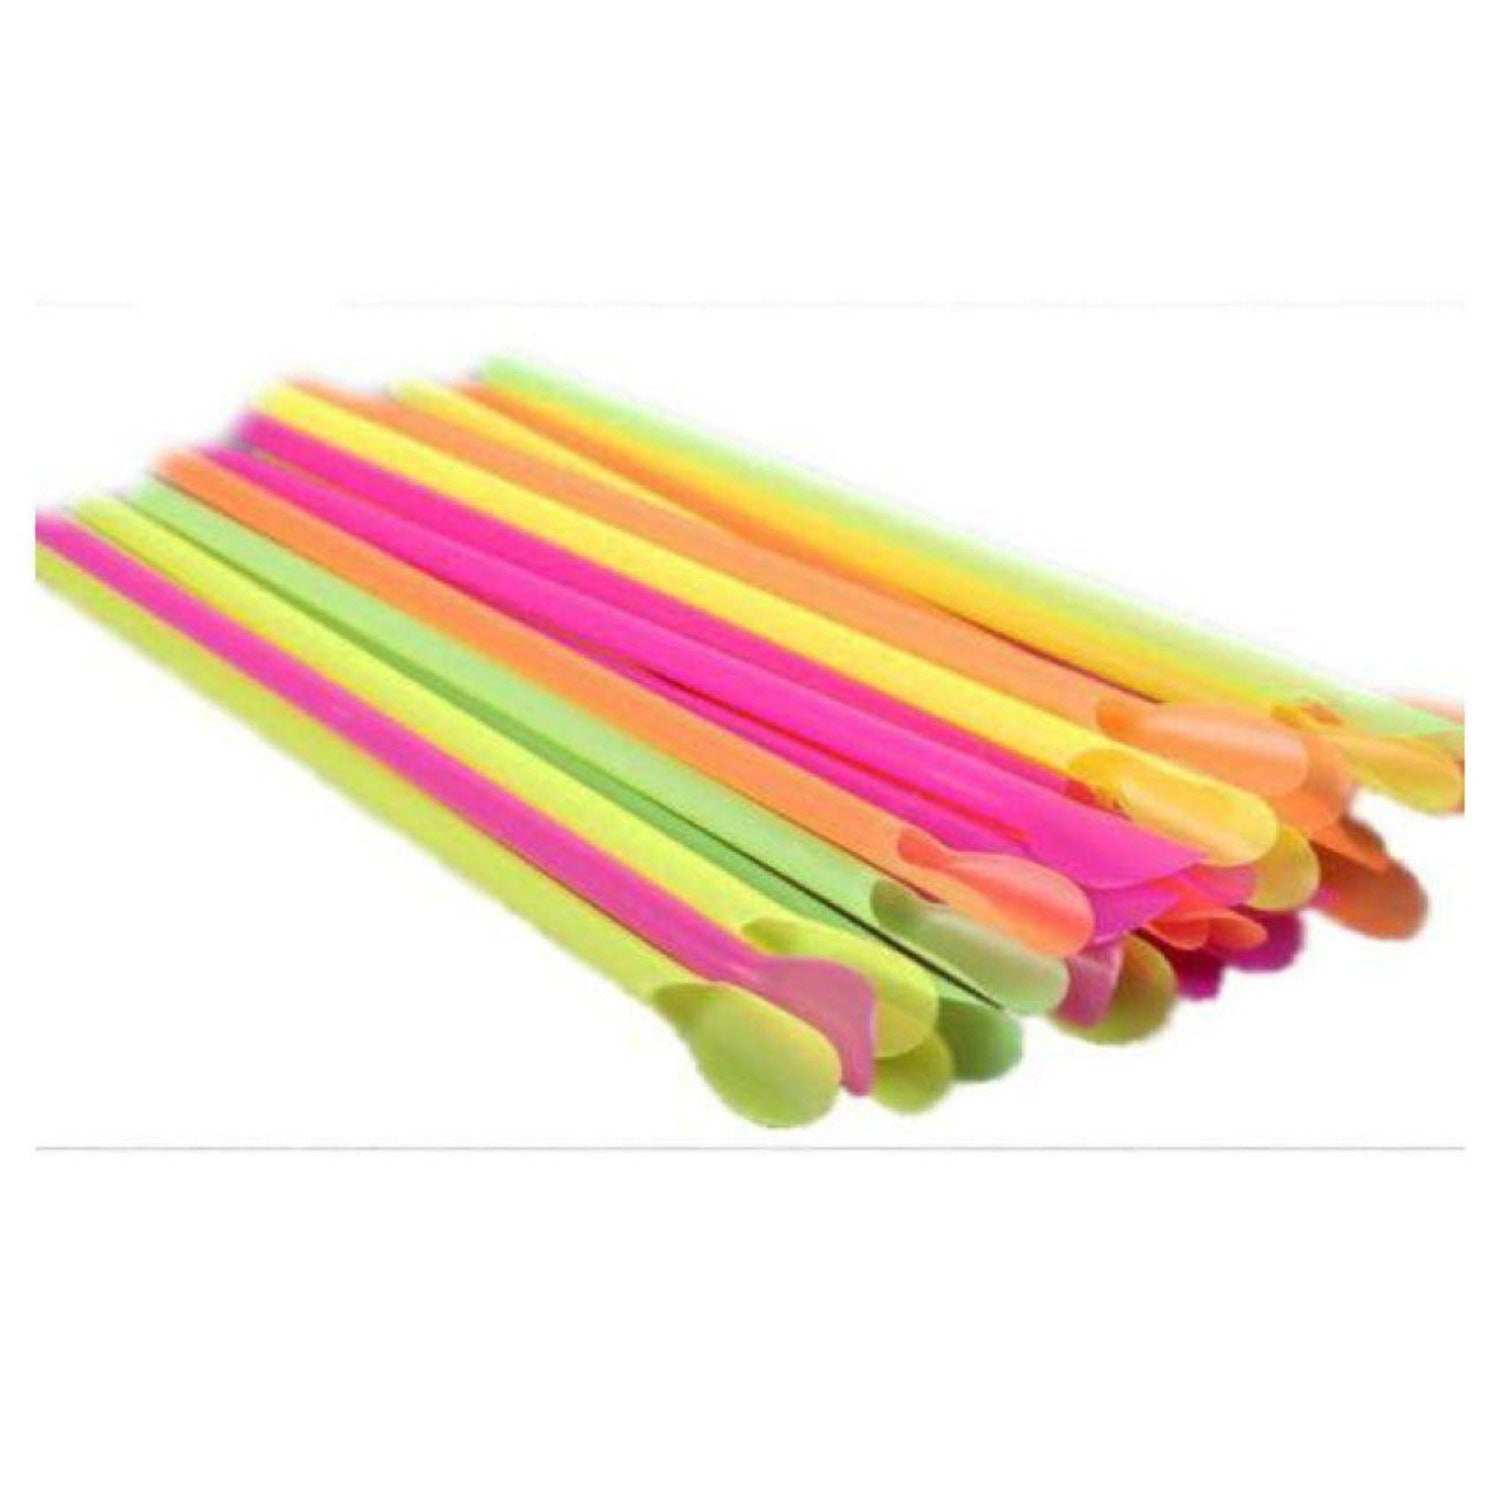 World of Confectioners - Plastic straws - straws 7 x 280mm NEON - 250 pcs ( reusable) - GoDan - Brčka, slámky - Tableware, Kitchen utensils